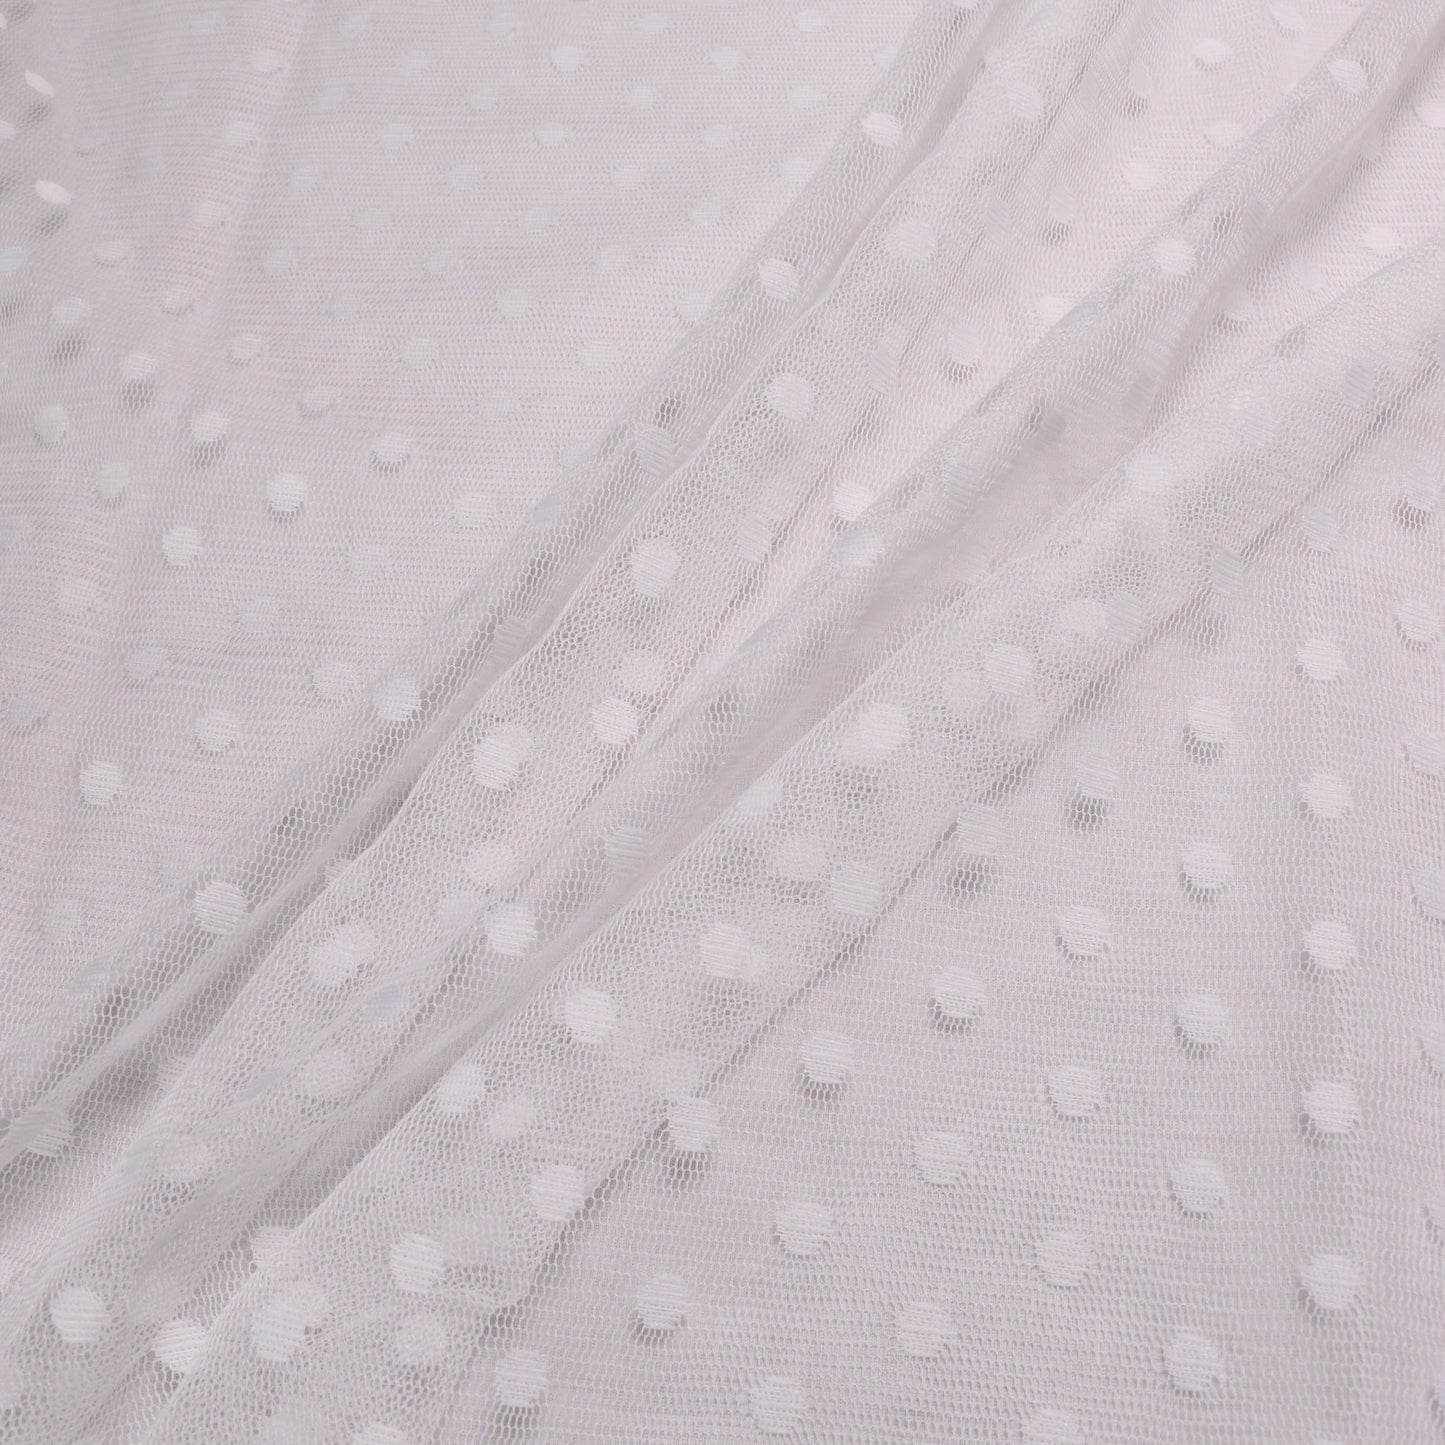 polka dot white dressmaking netting mesh fabric